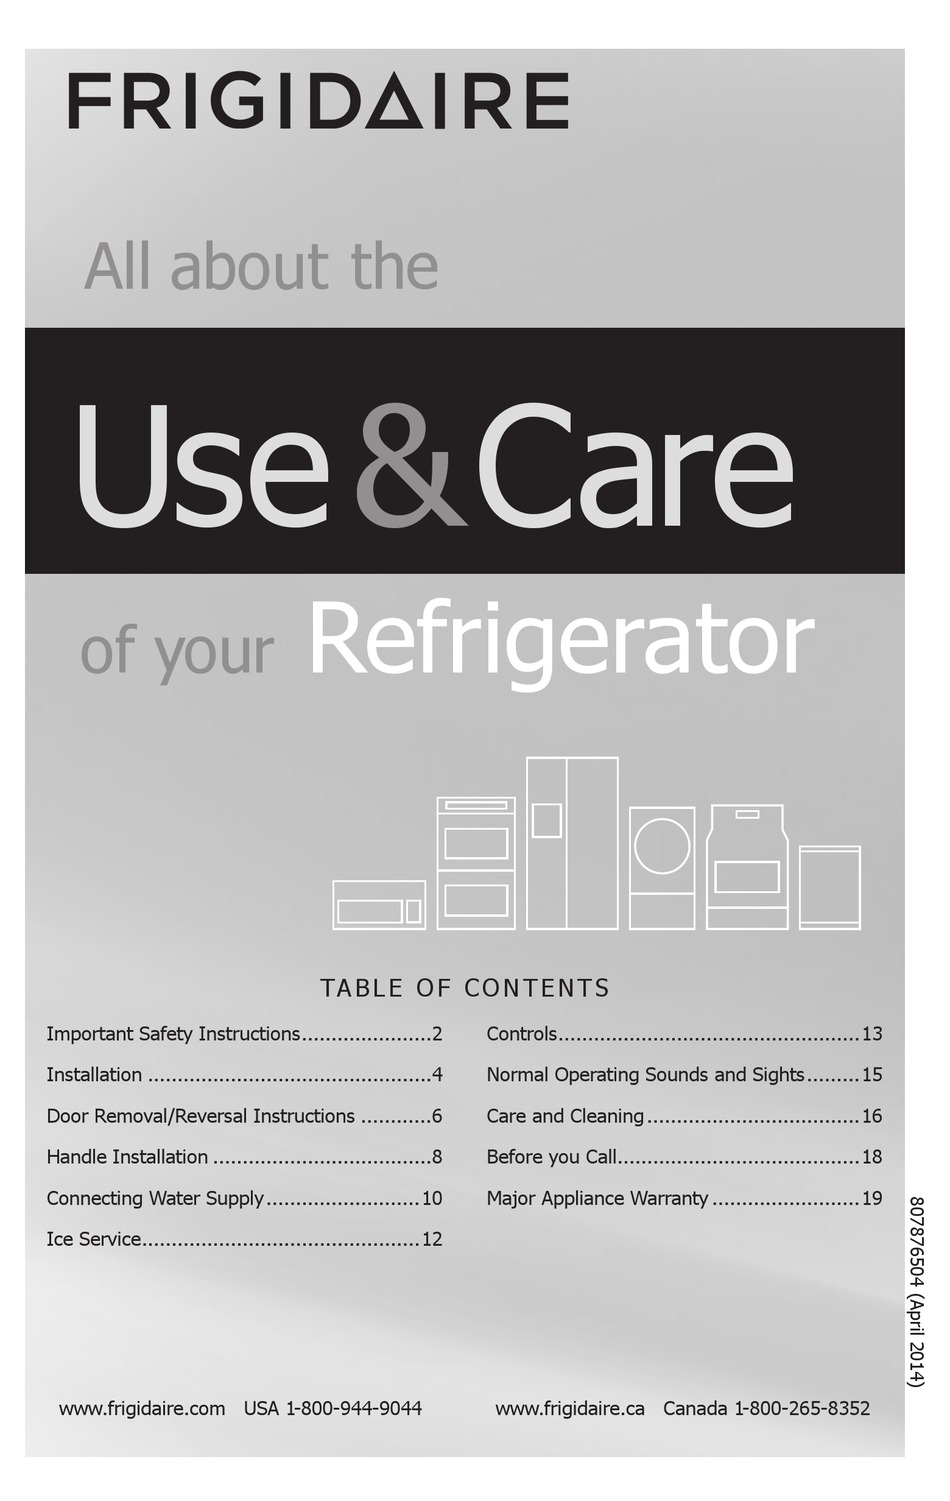 Frigidaire Professional Series Refrigerator Manual